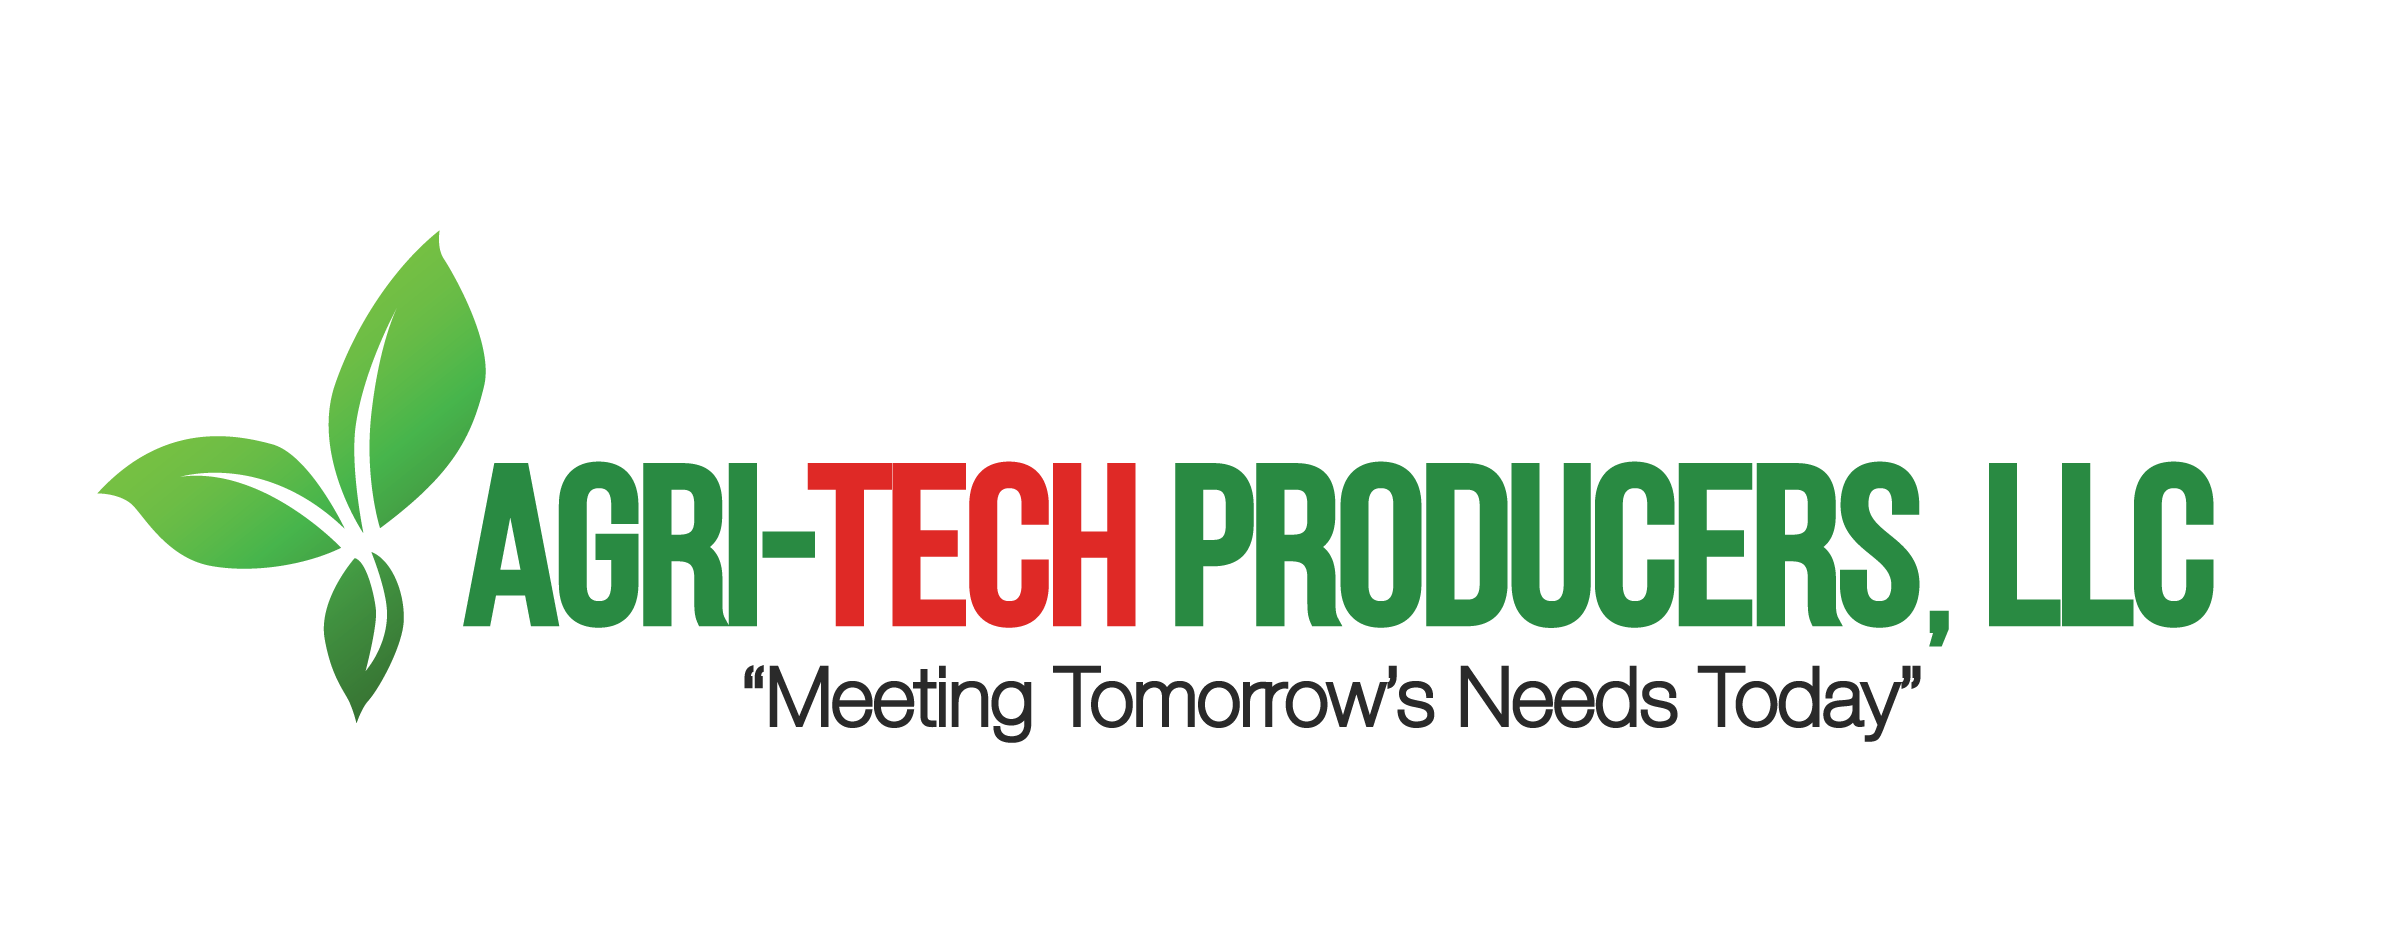 Agri-Tech Producers LLC Logo